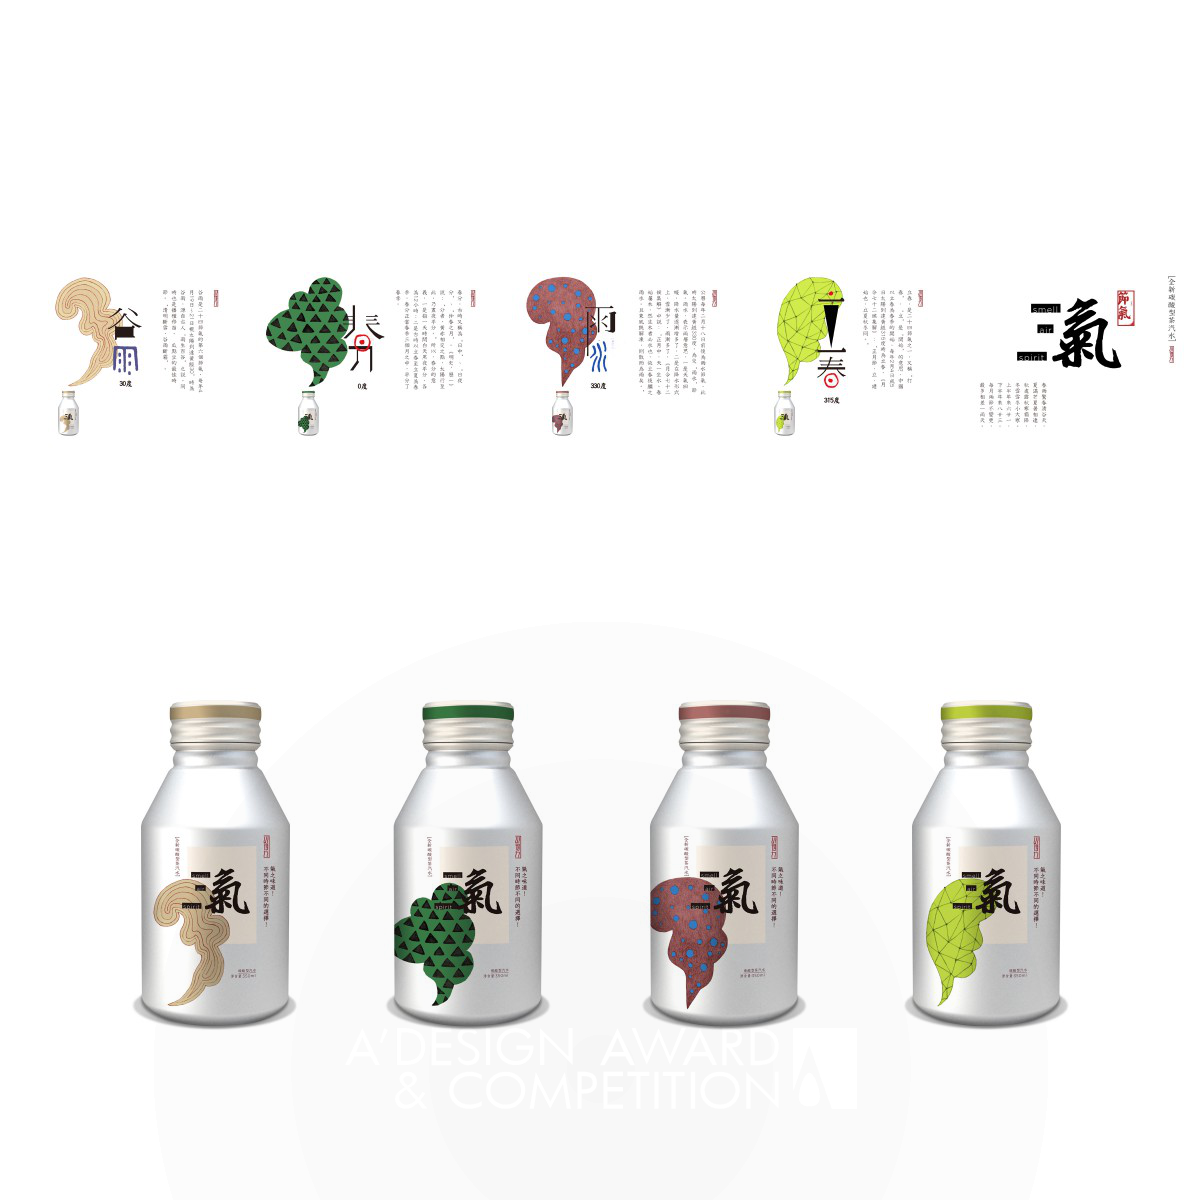 Qi Series Package by Dongdao Design Team Bronze Packaging Design Award Winner 2015 